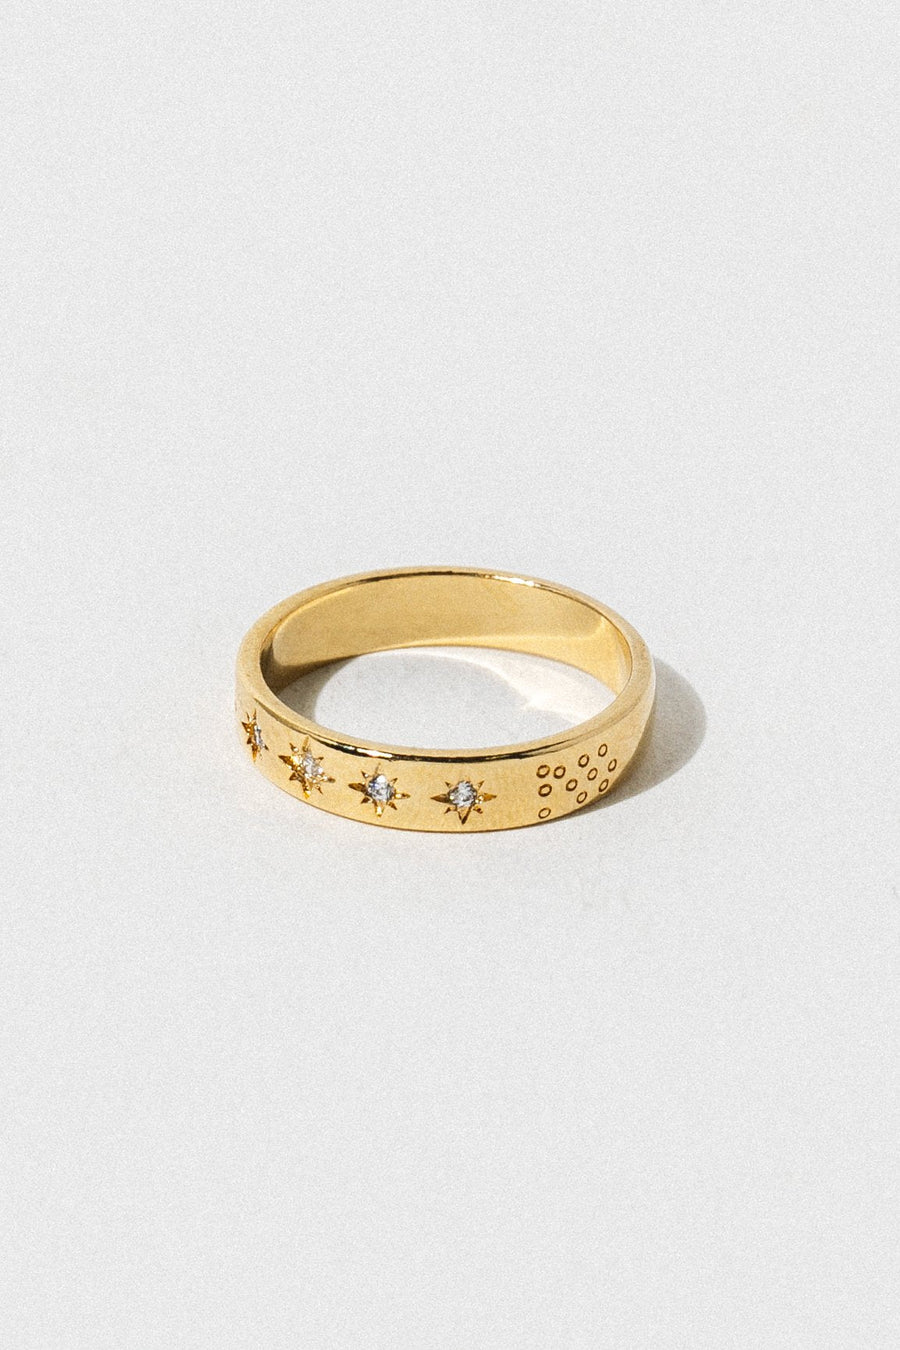 Sparrow Jewelry US 7 / Gold Stellium Ring